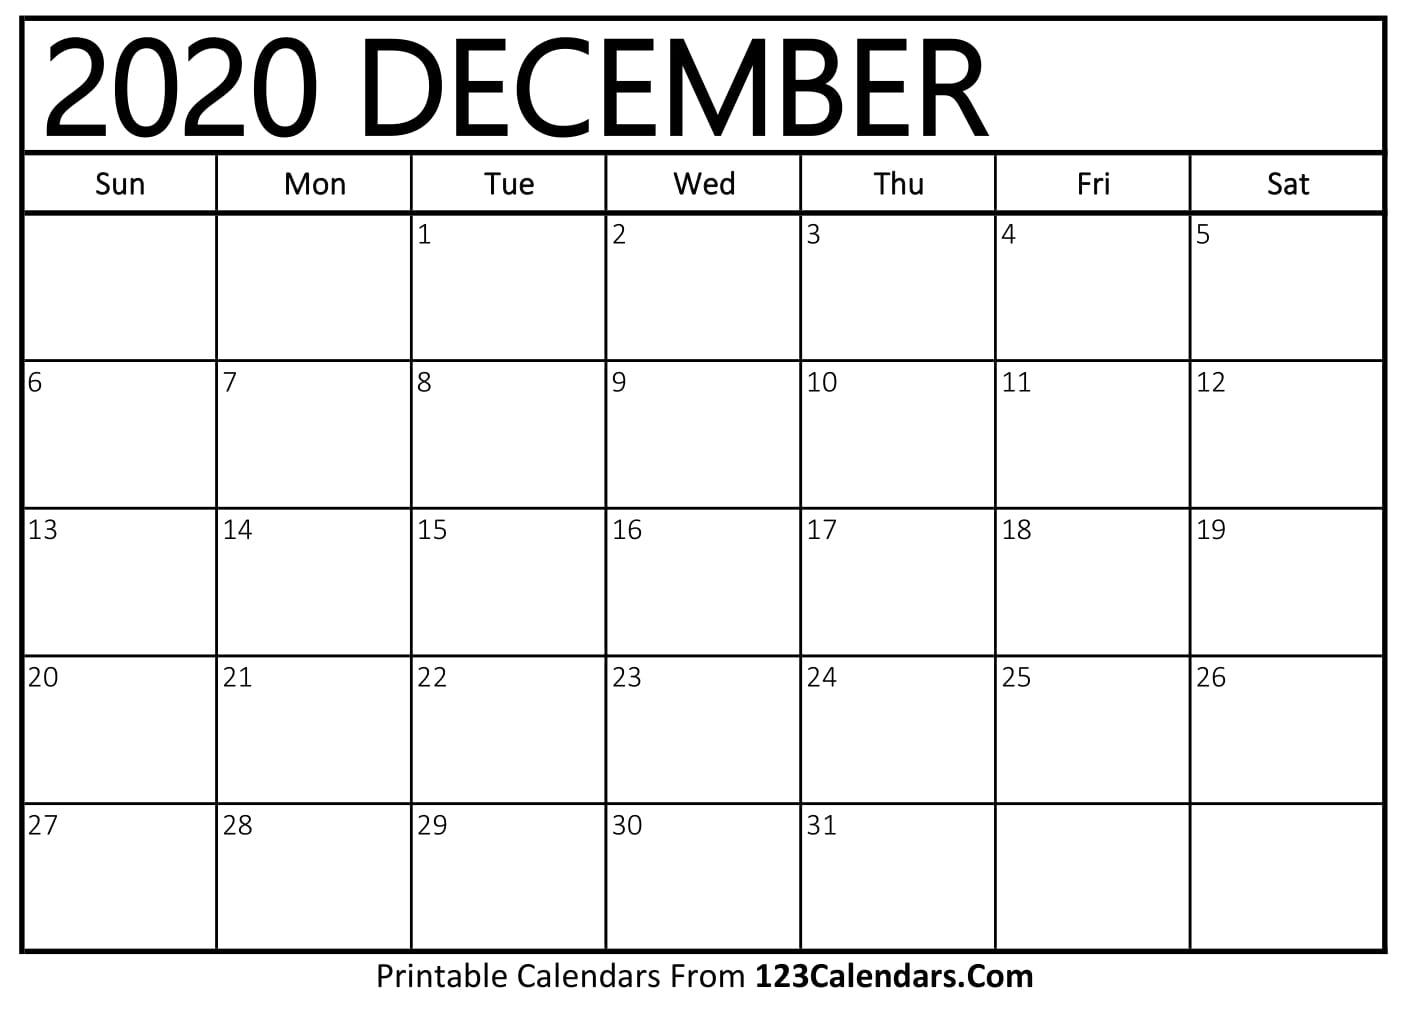 december-2020-printable-calendar-123calendars